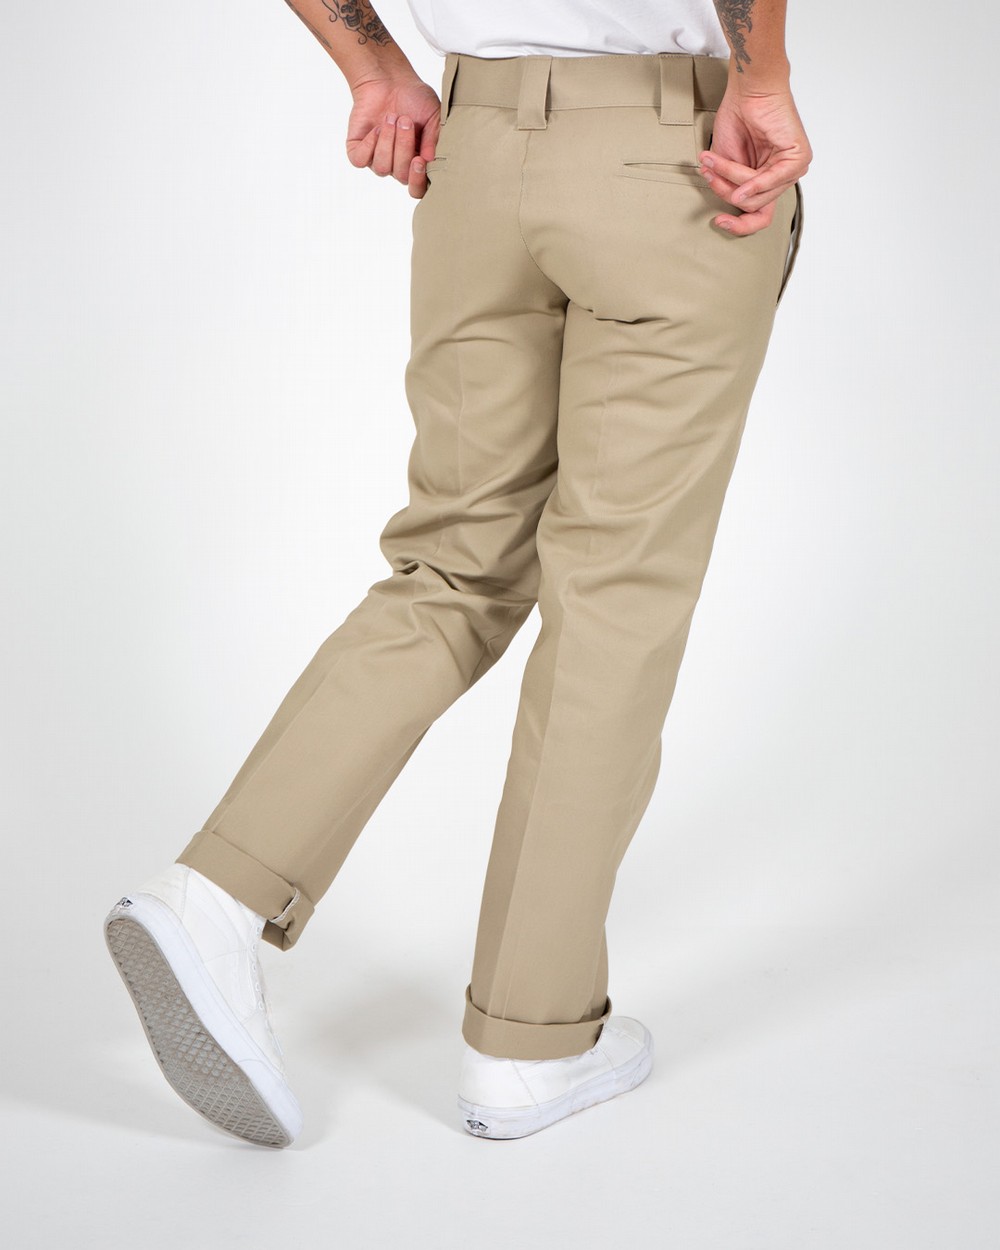 Buy Grey Trousers  Pants for Men by PINE REPUBLIC Online  Ajiocom